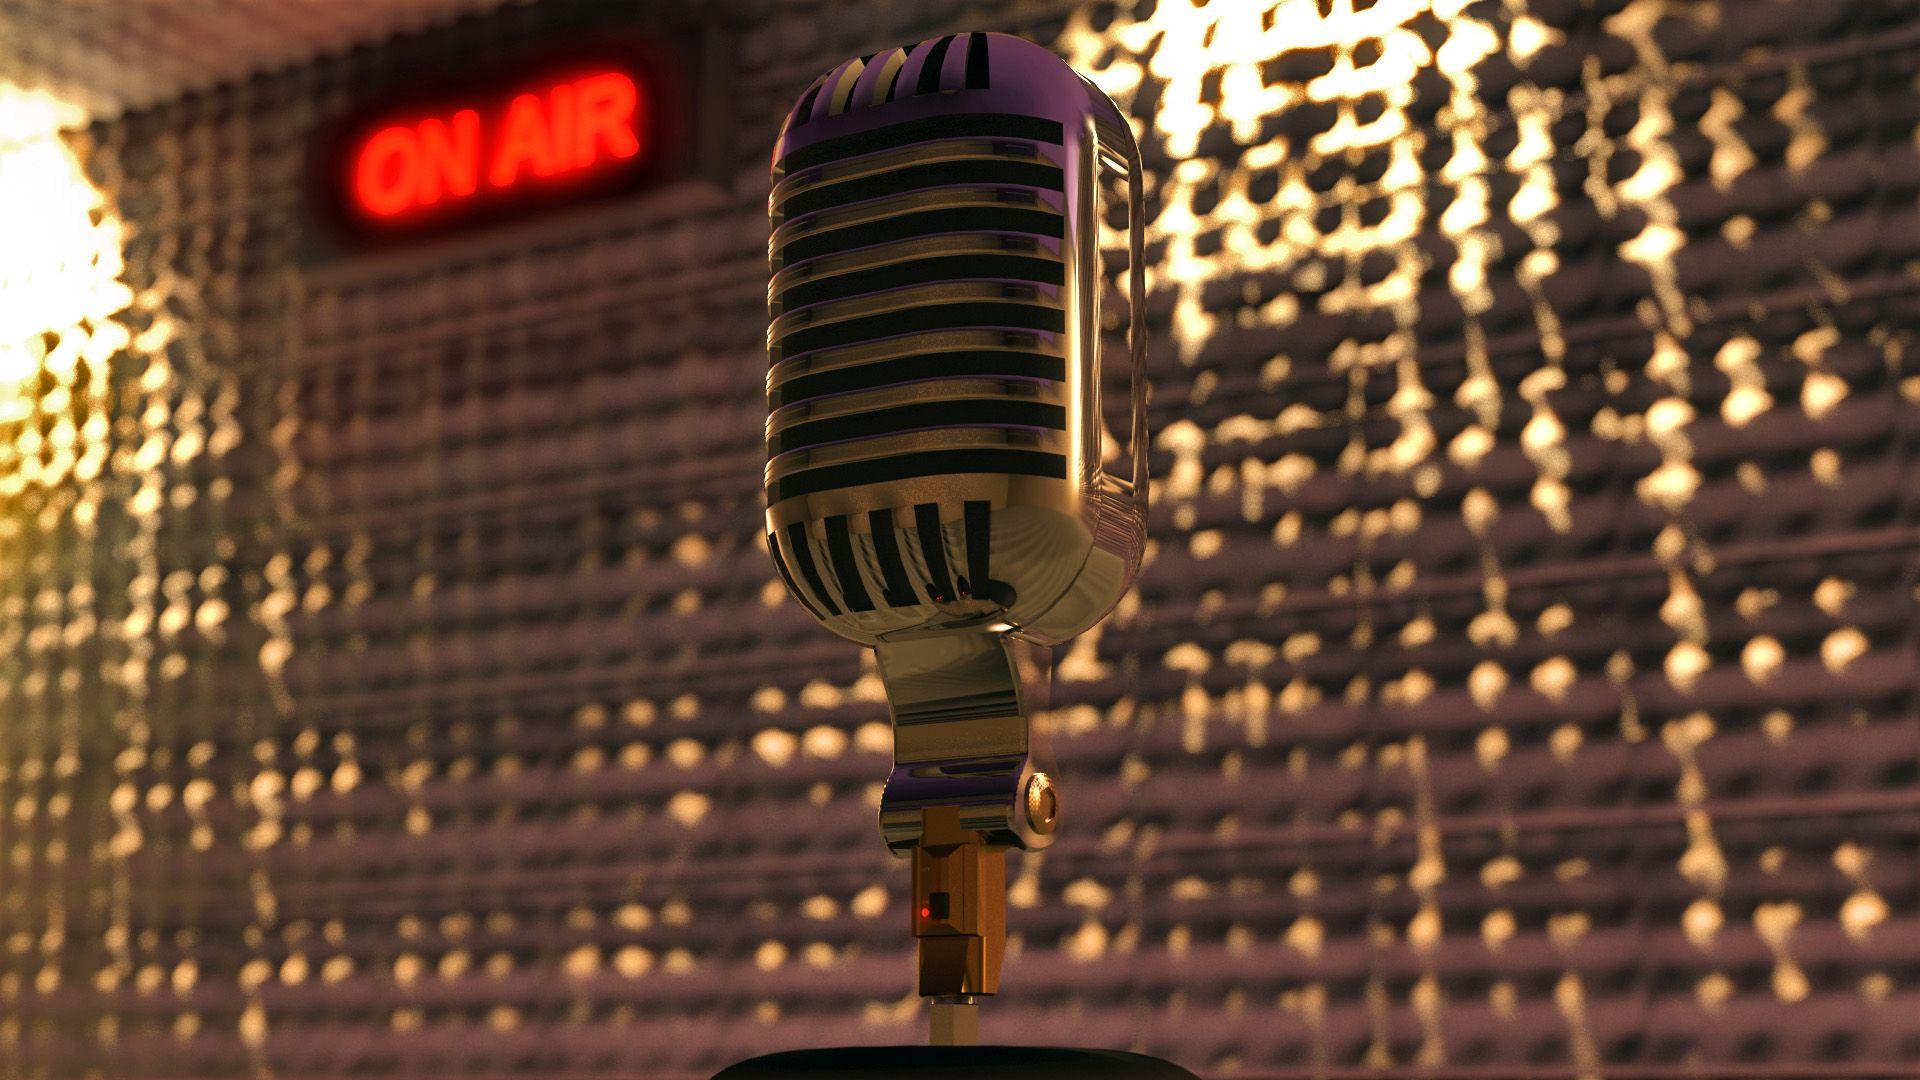 Песни на радиостанции. Микрофон. Микрофон в студии. Микрофон для радиостудии. Микрофон в студии звукозаписи.